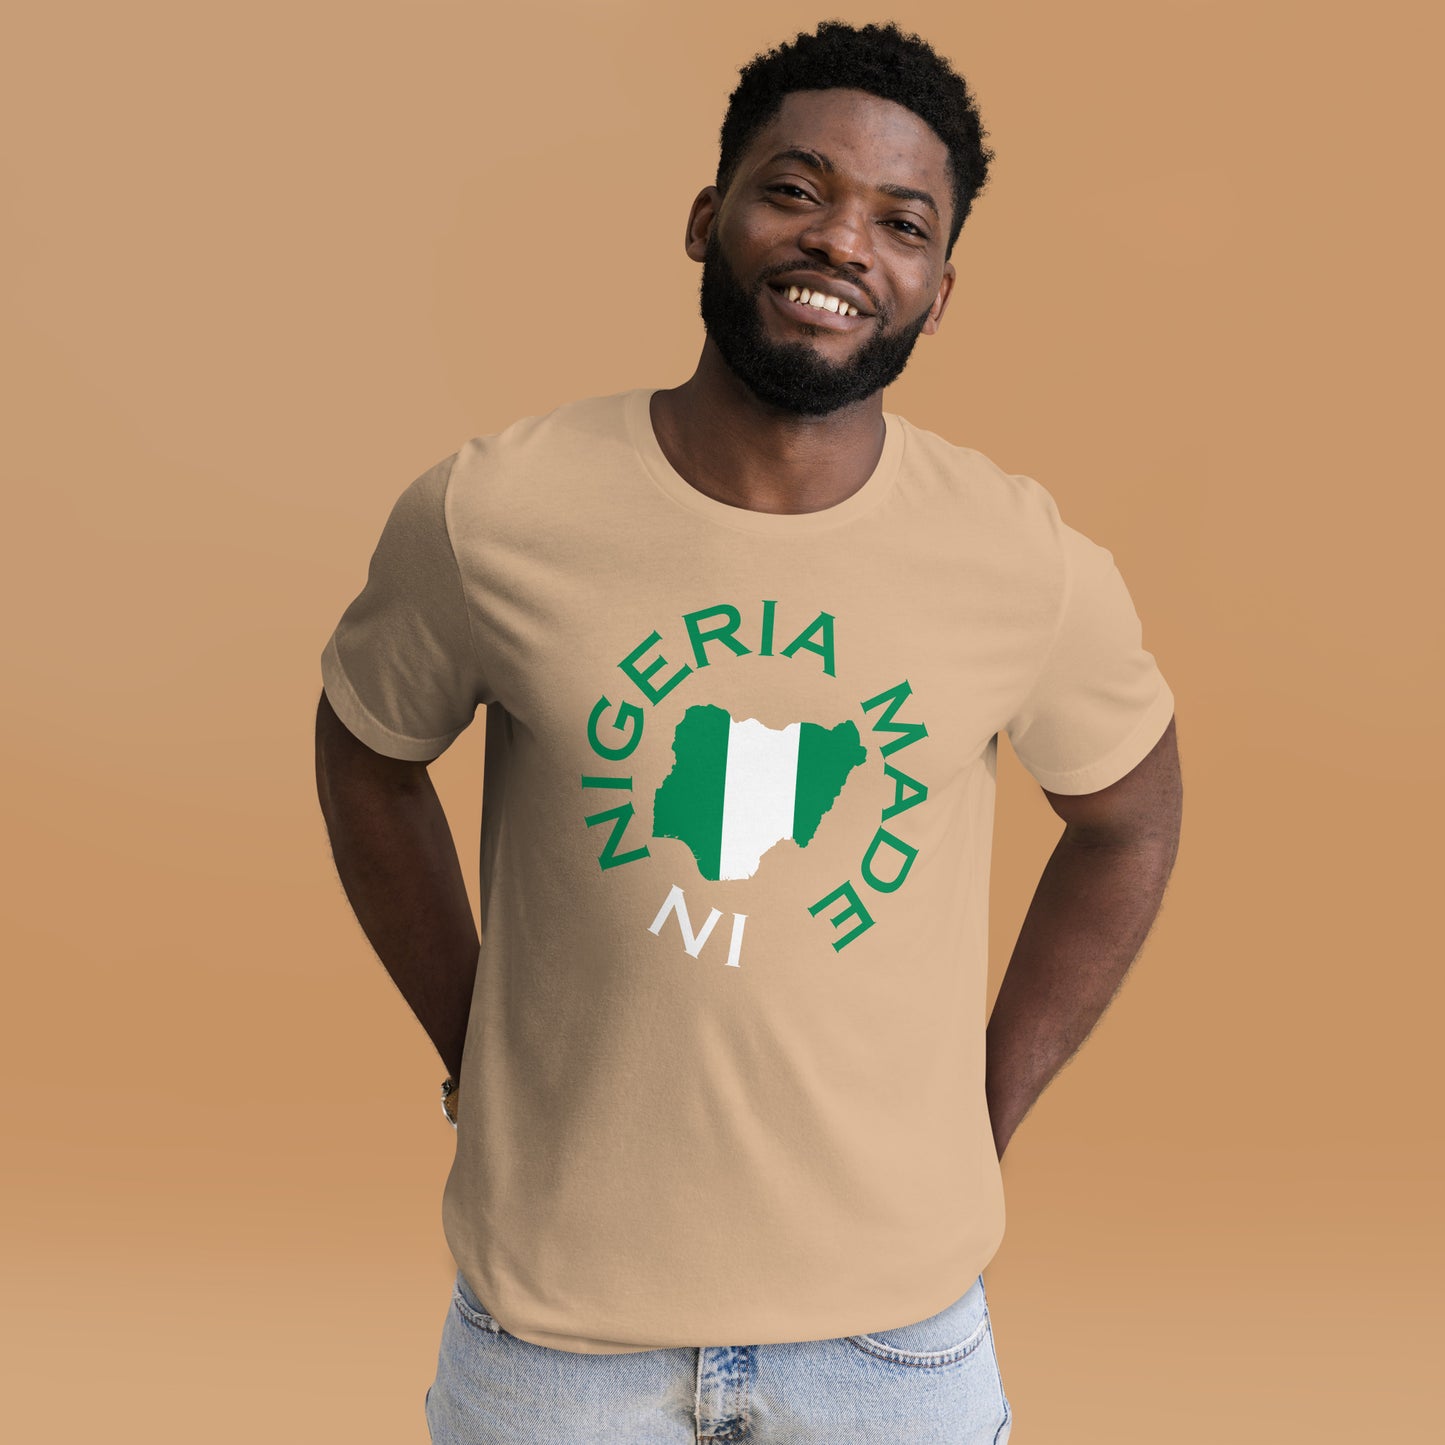 Made in Nigeria Men's T-shirt